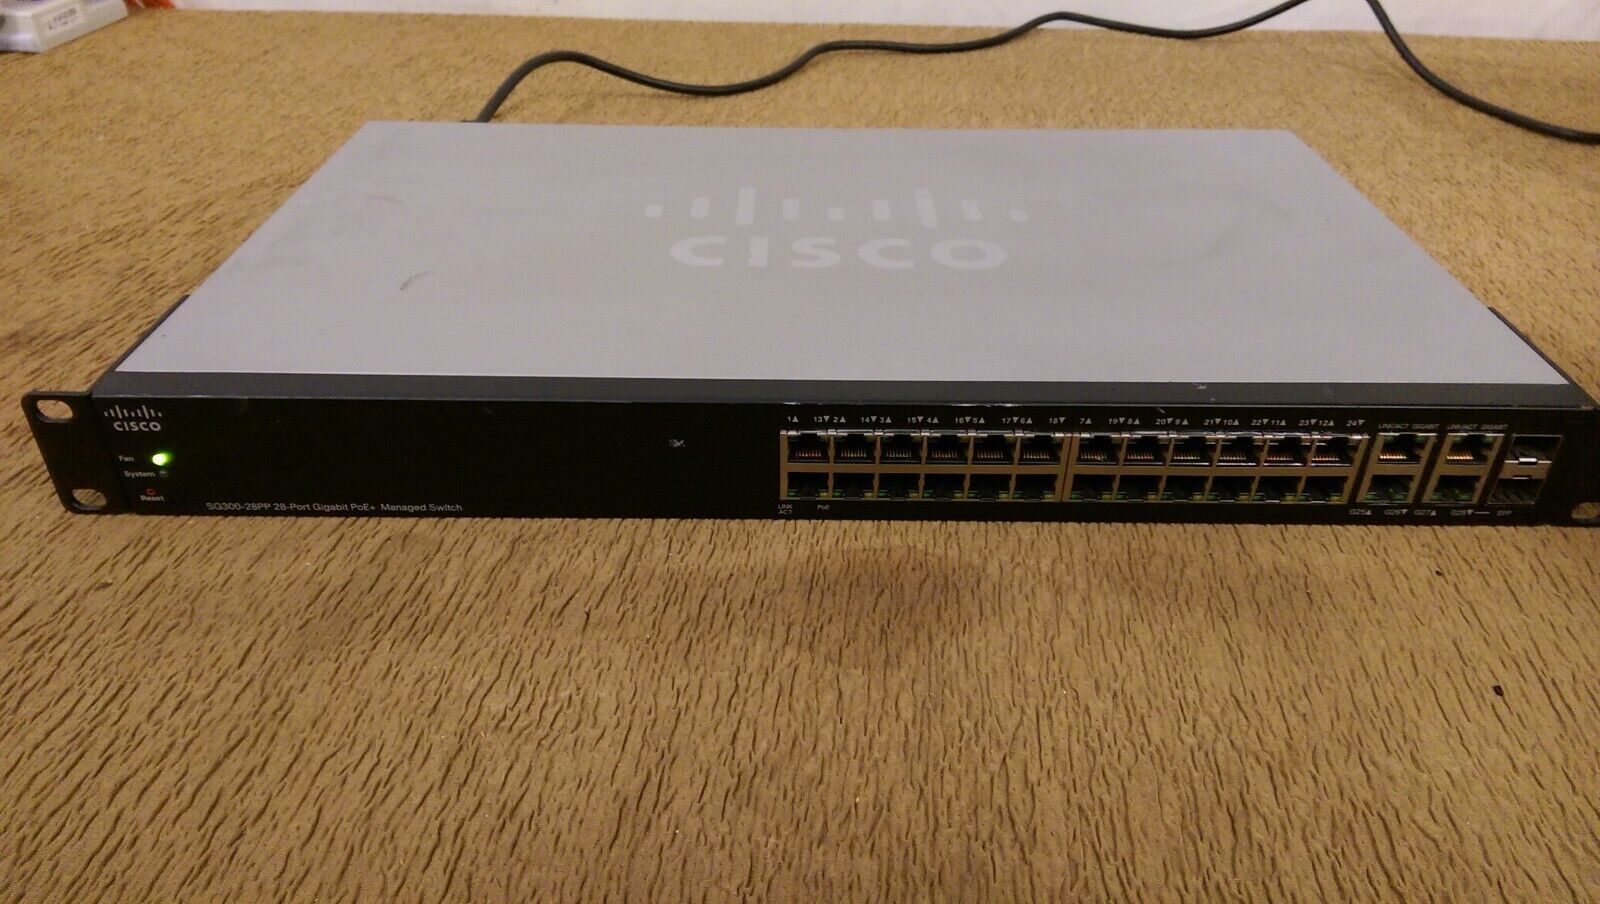 Cisco SG300-28PP 28 Port Gigabit PoE+ Managed Switch- USED